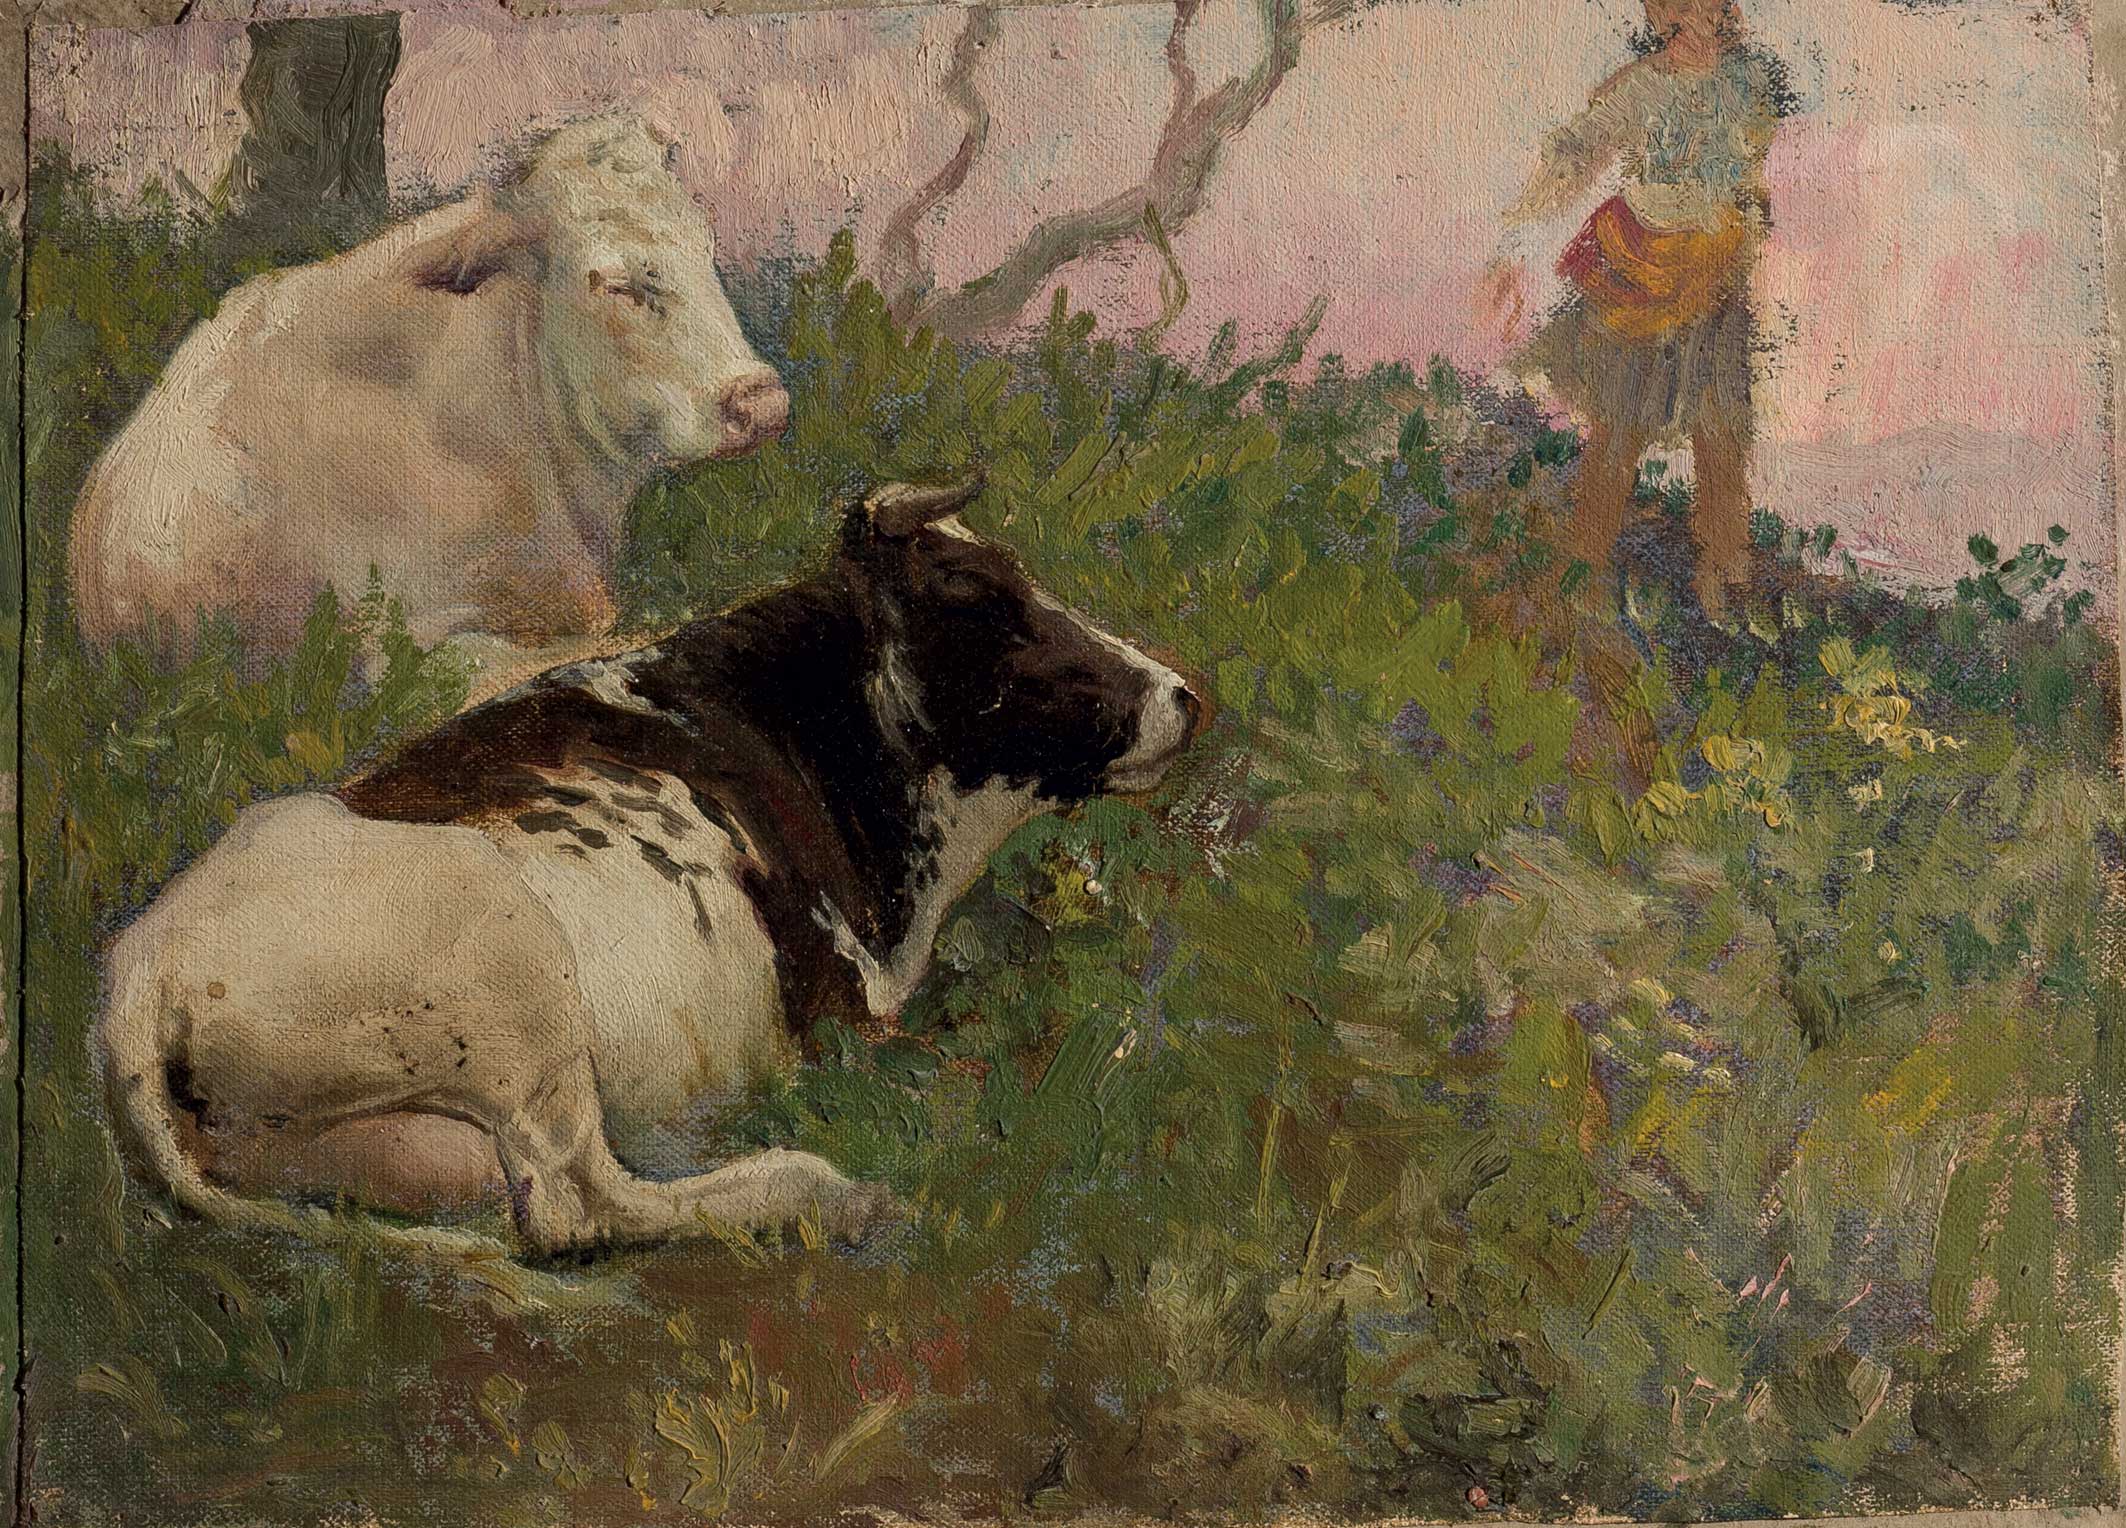 GÁRATE CLAVERO, JUAN JOSÉ (1870 - 1939). "Vacas". Óleo sobre lienzo pegado a cartón. 20 x 27.